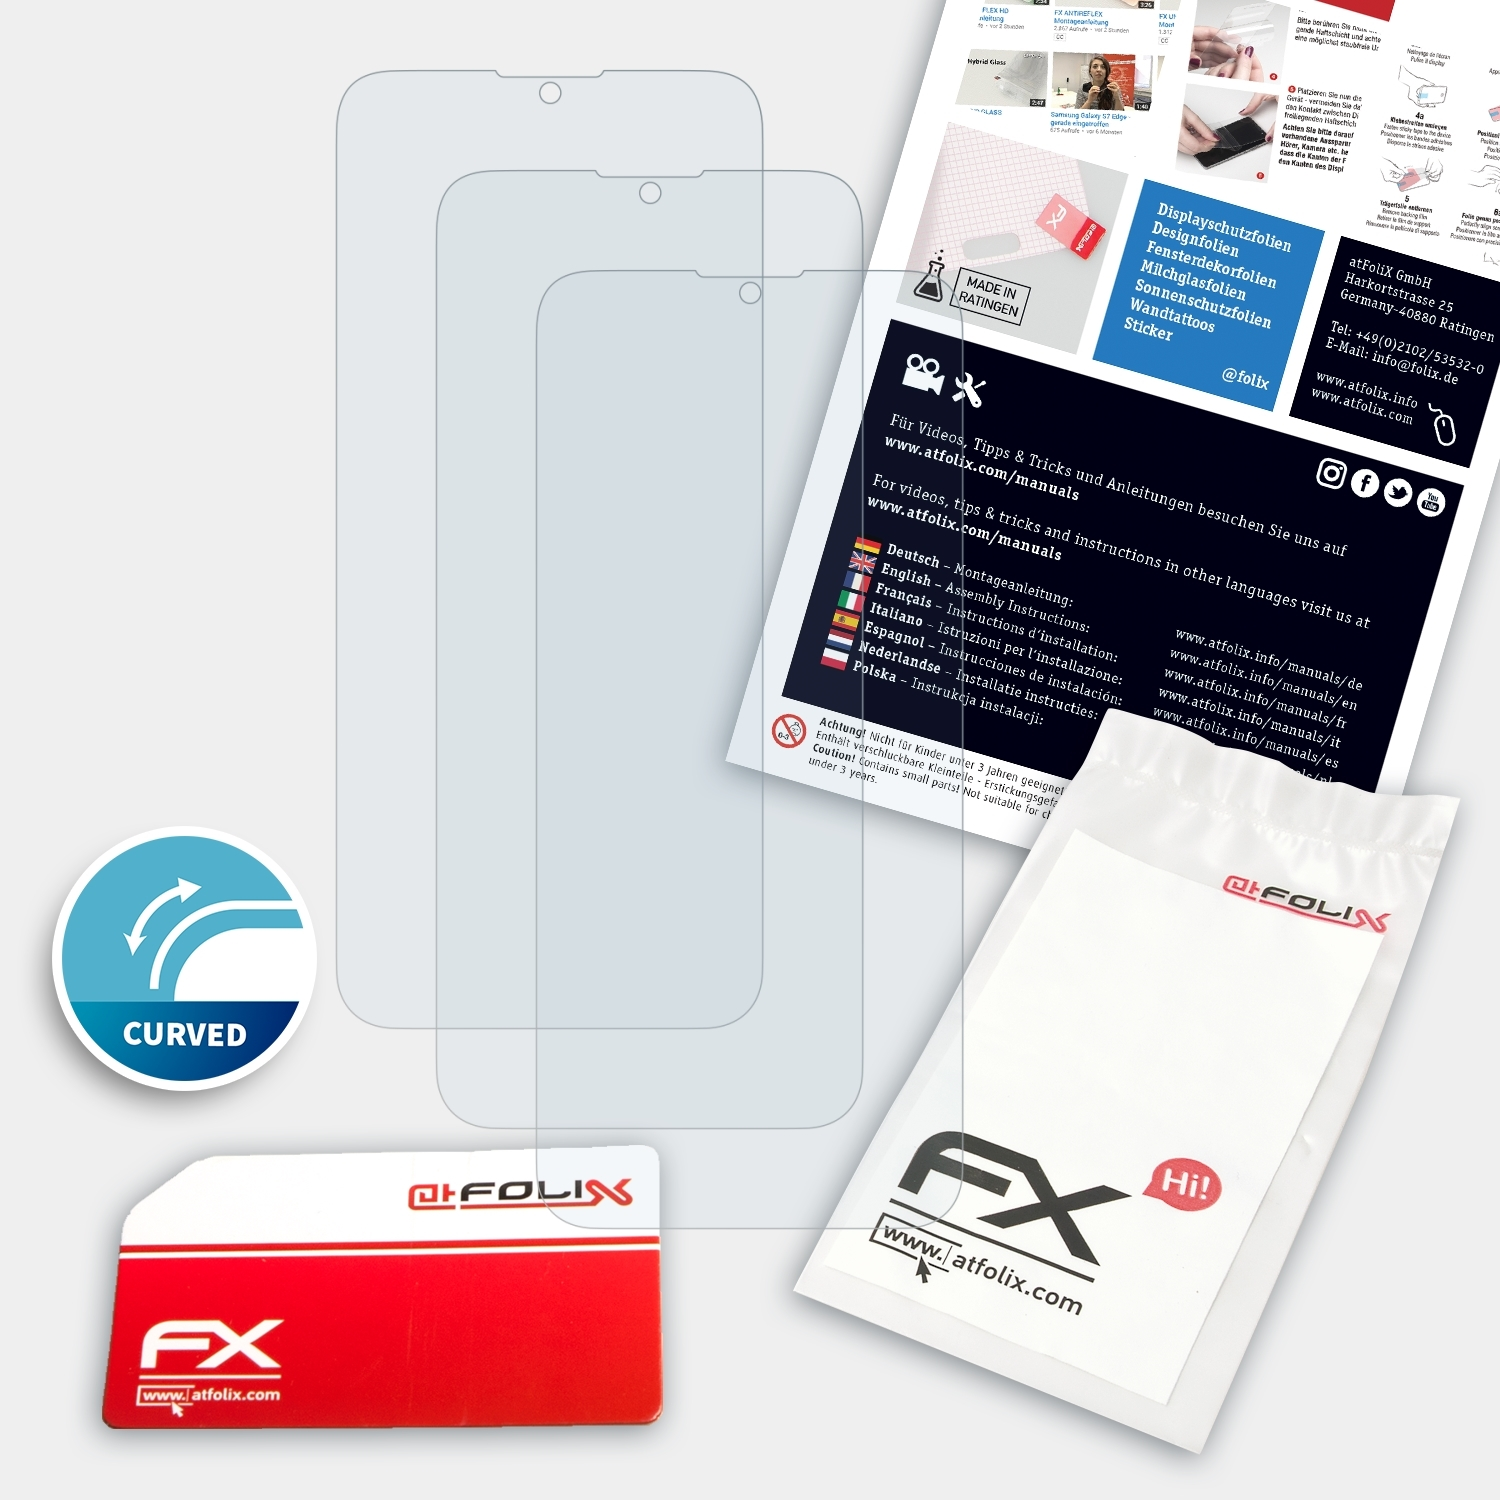 ATFOLIX 3x FX-ActiFleX Displayschutz(für Motorola E7) Moto